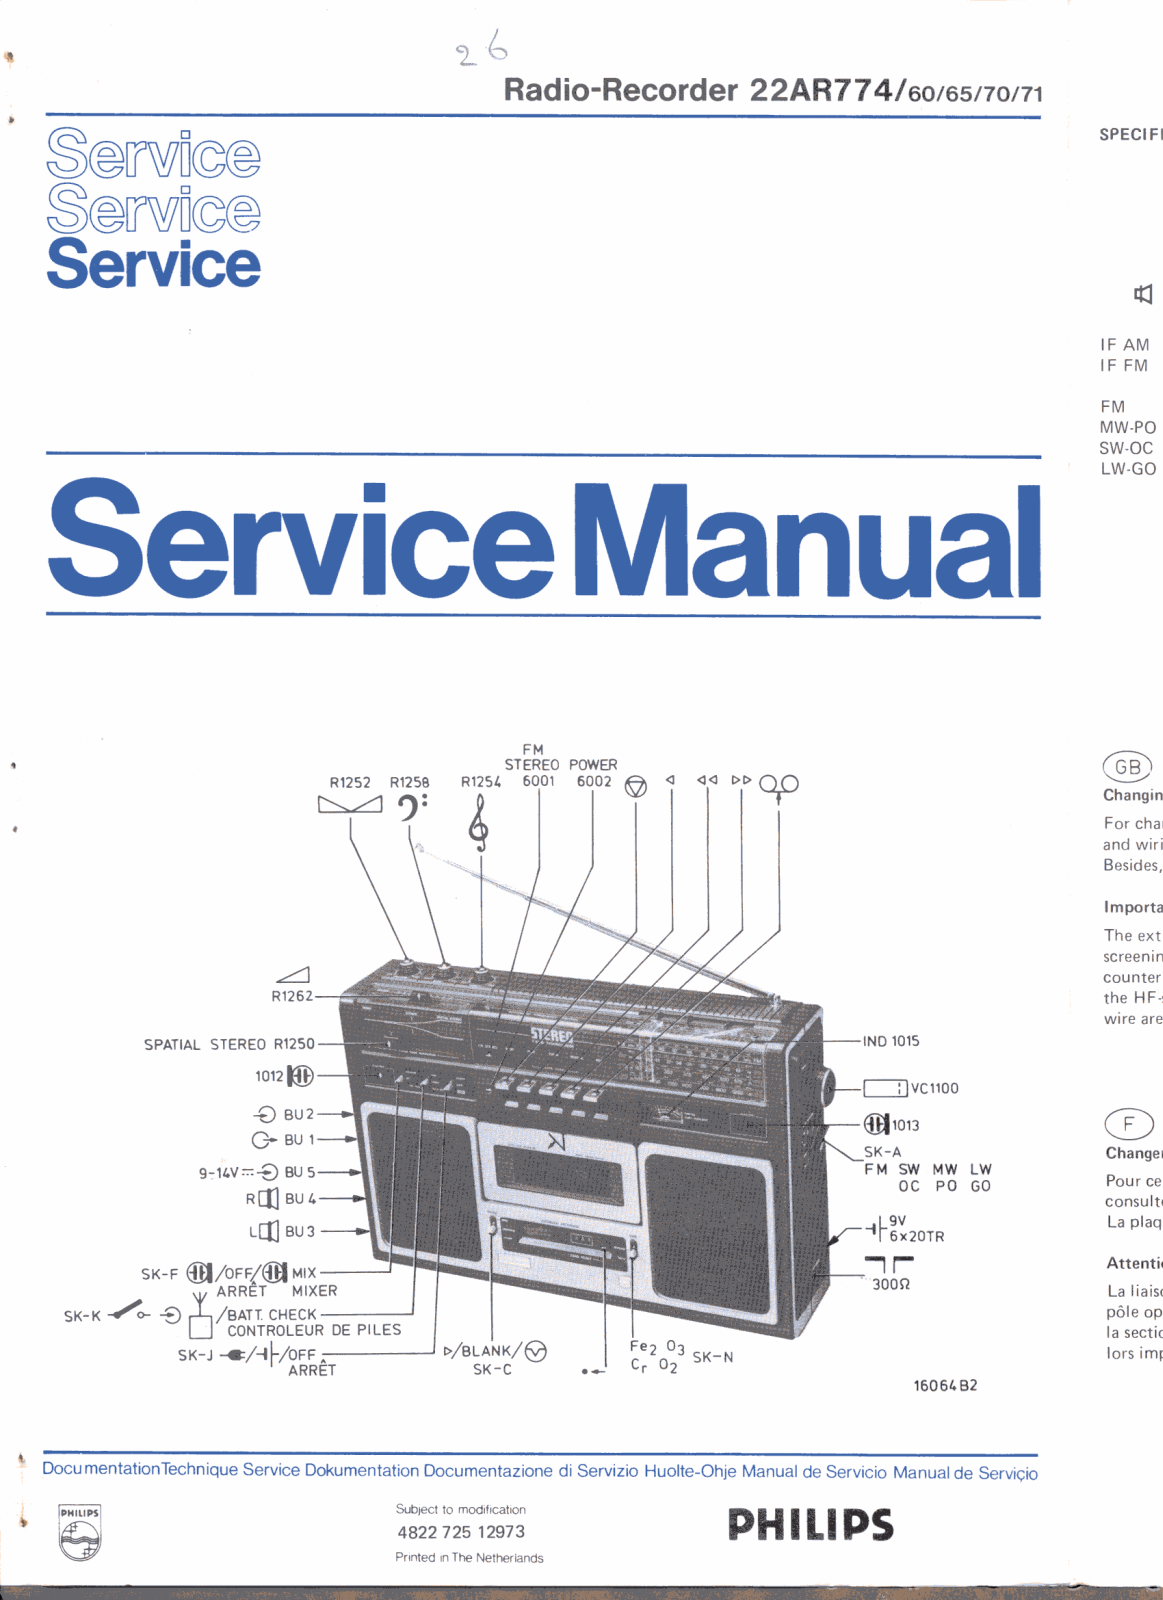 Philips 22-AR-774 Service Manual